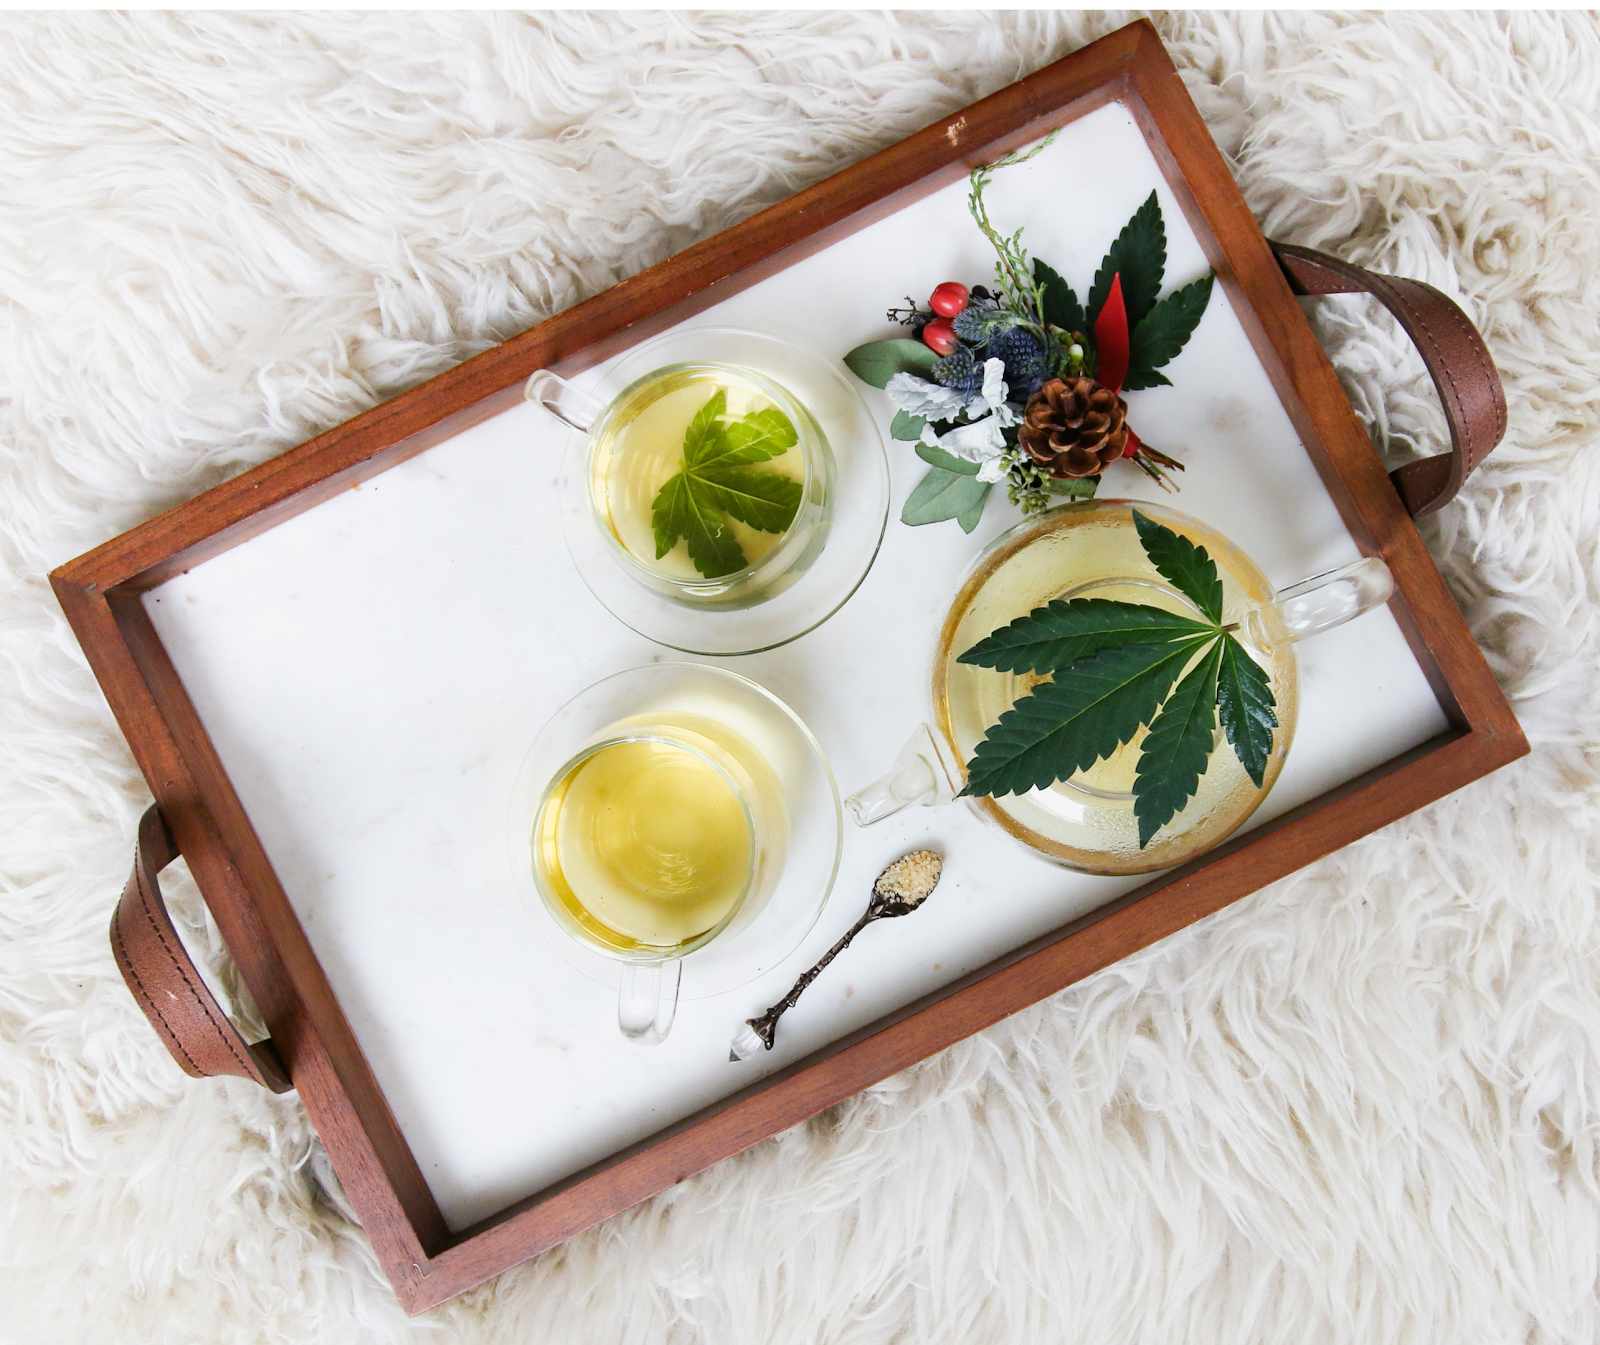 Medical Cannabis or Medical Marijuana Tea for Pain Relief